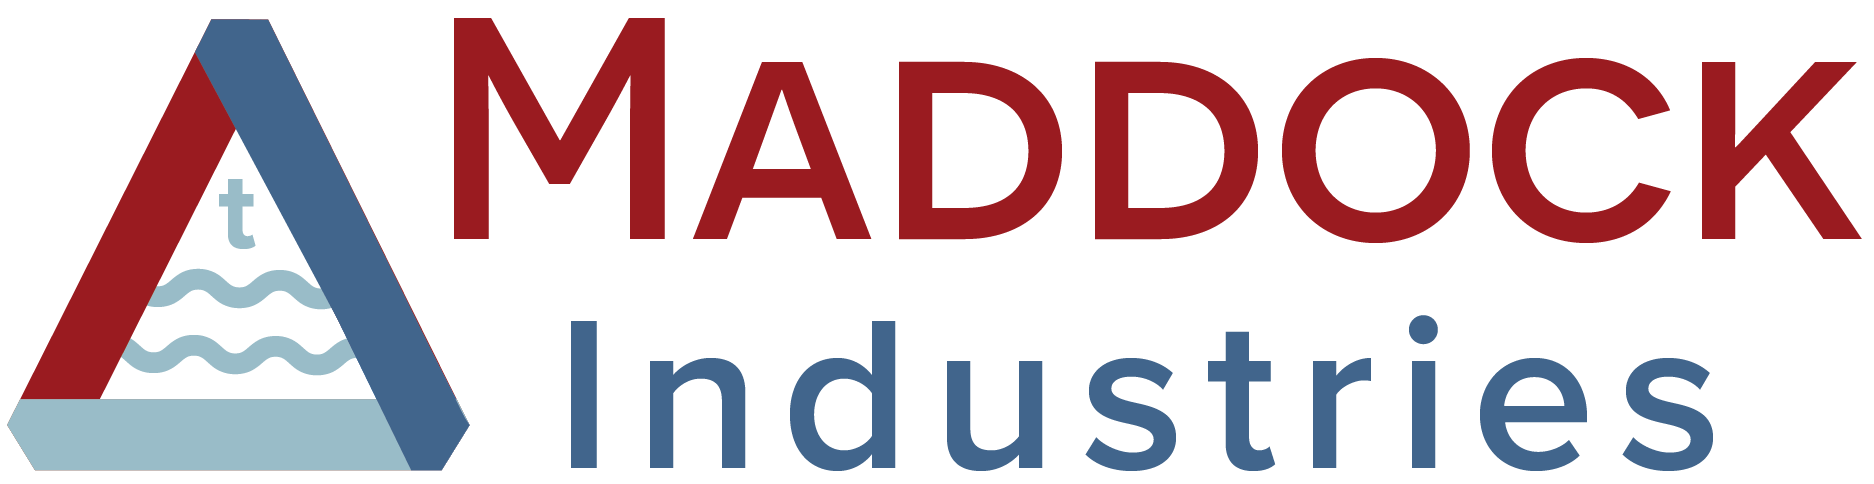 Maddock Industries Logo